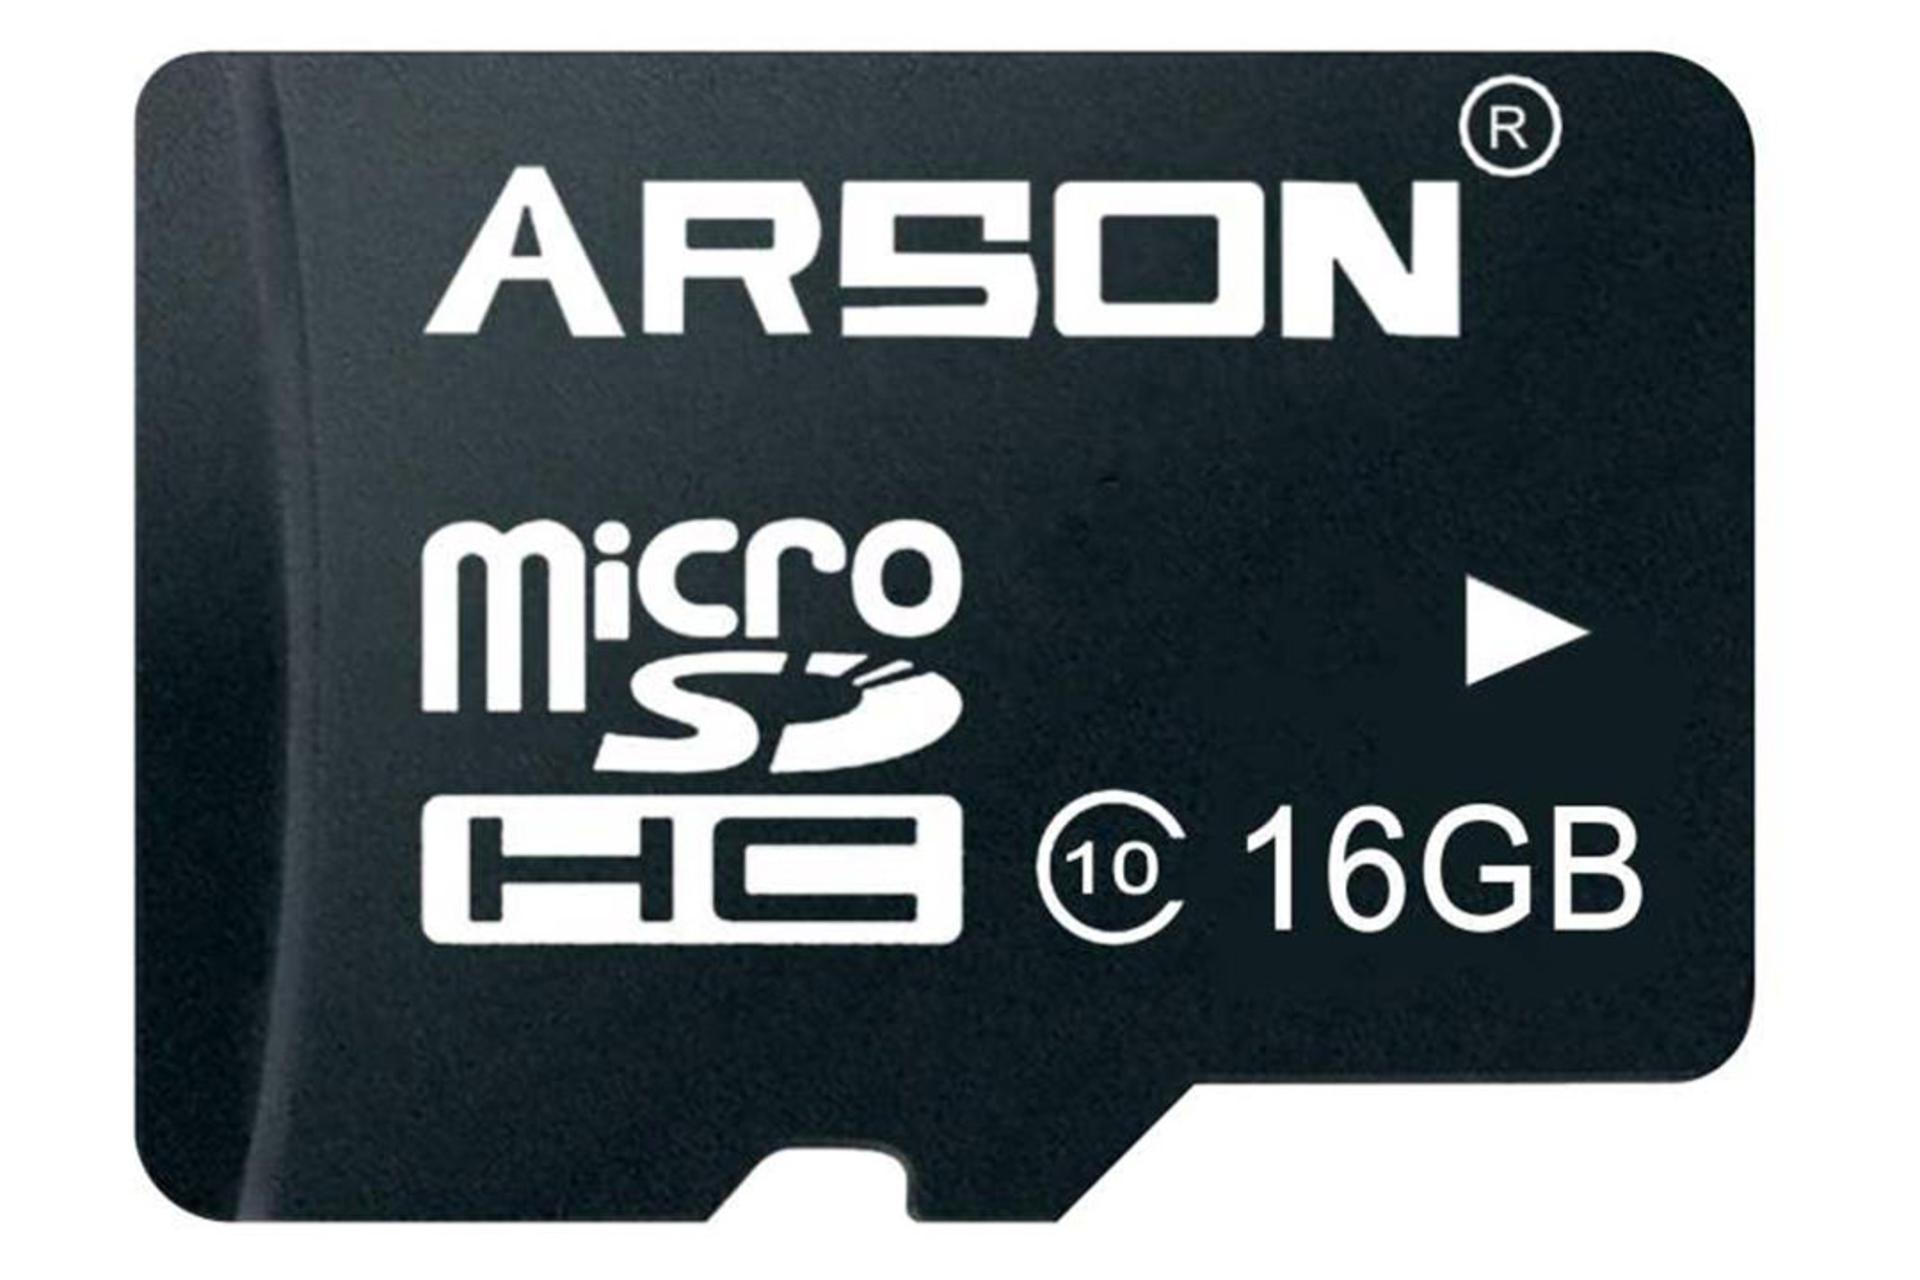 Arson AM-2116 microSDHC Class 10 16GB